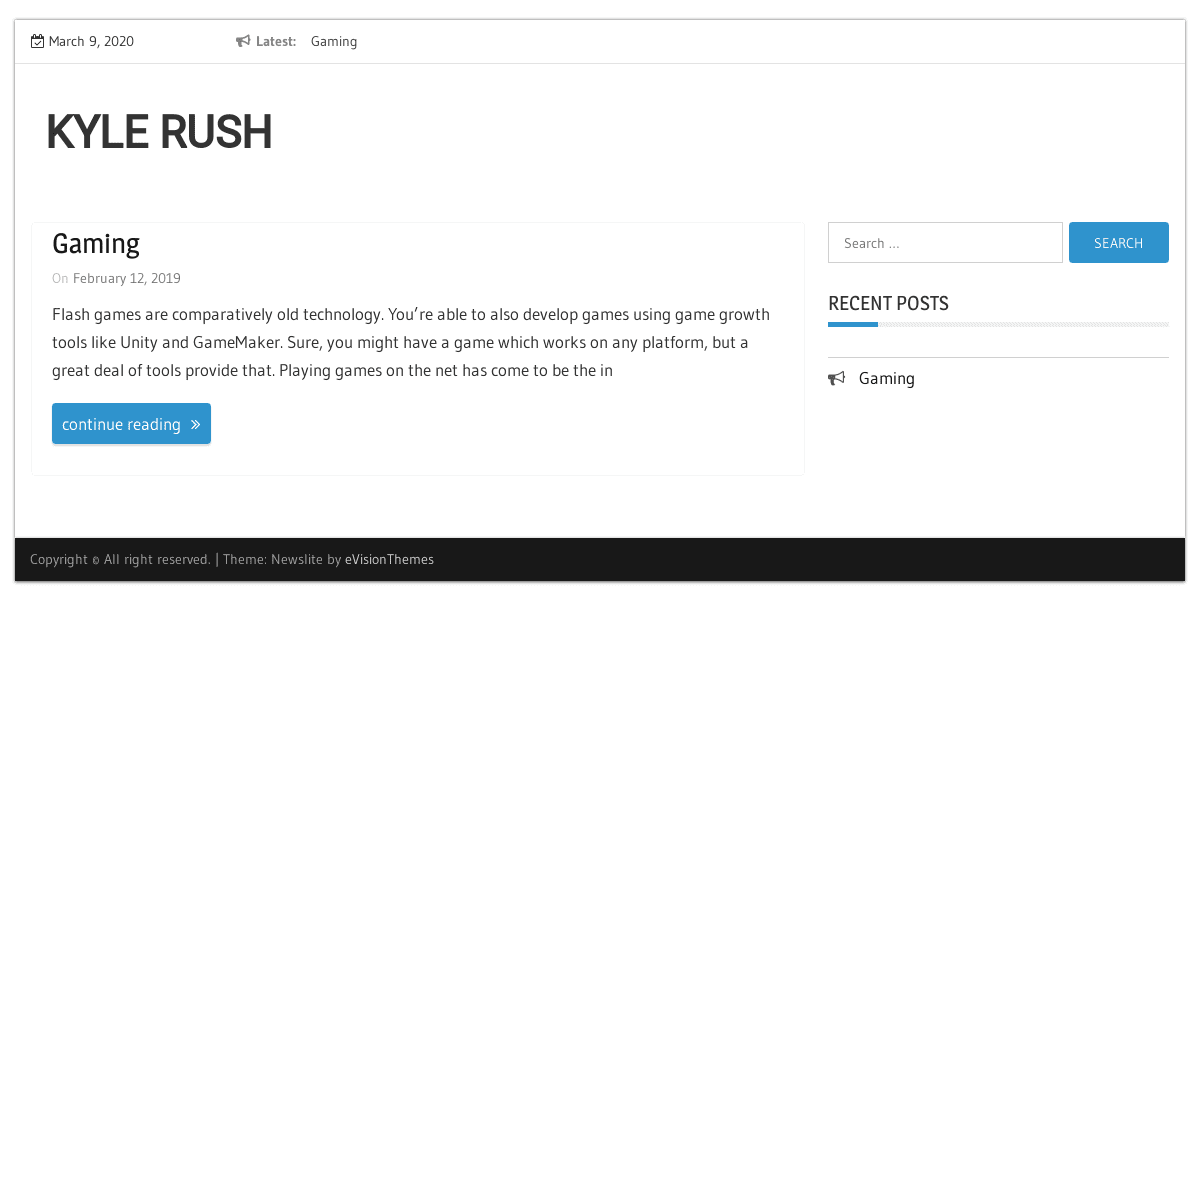 A complete backup of kylerush.net